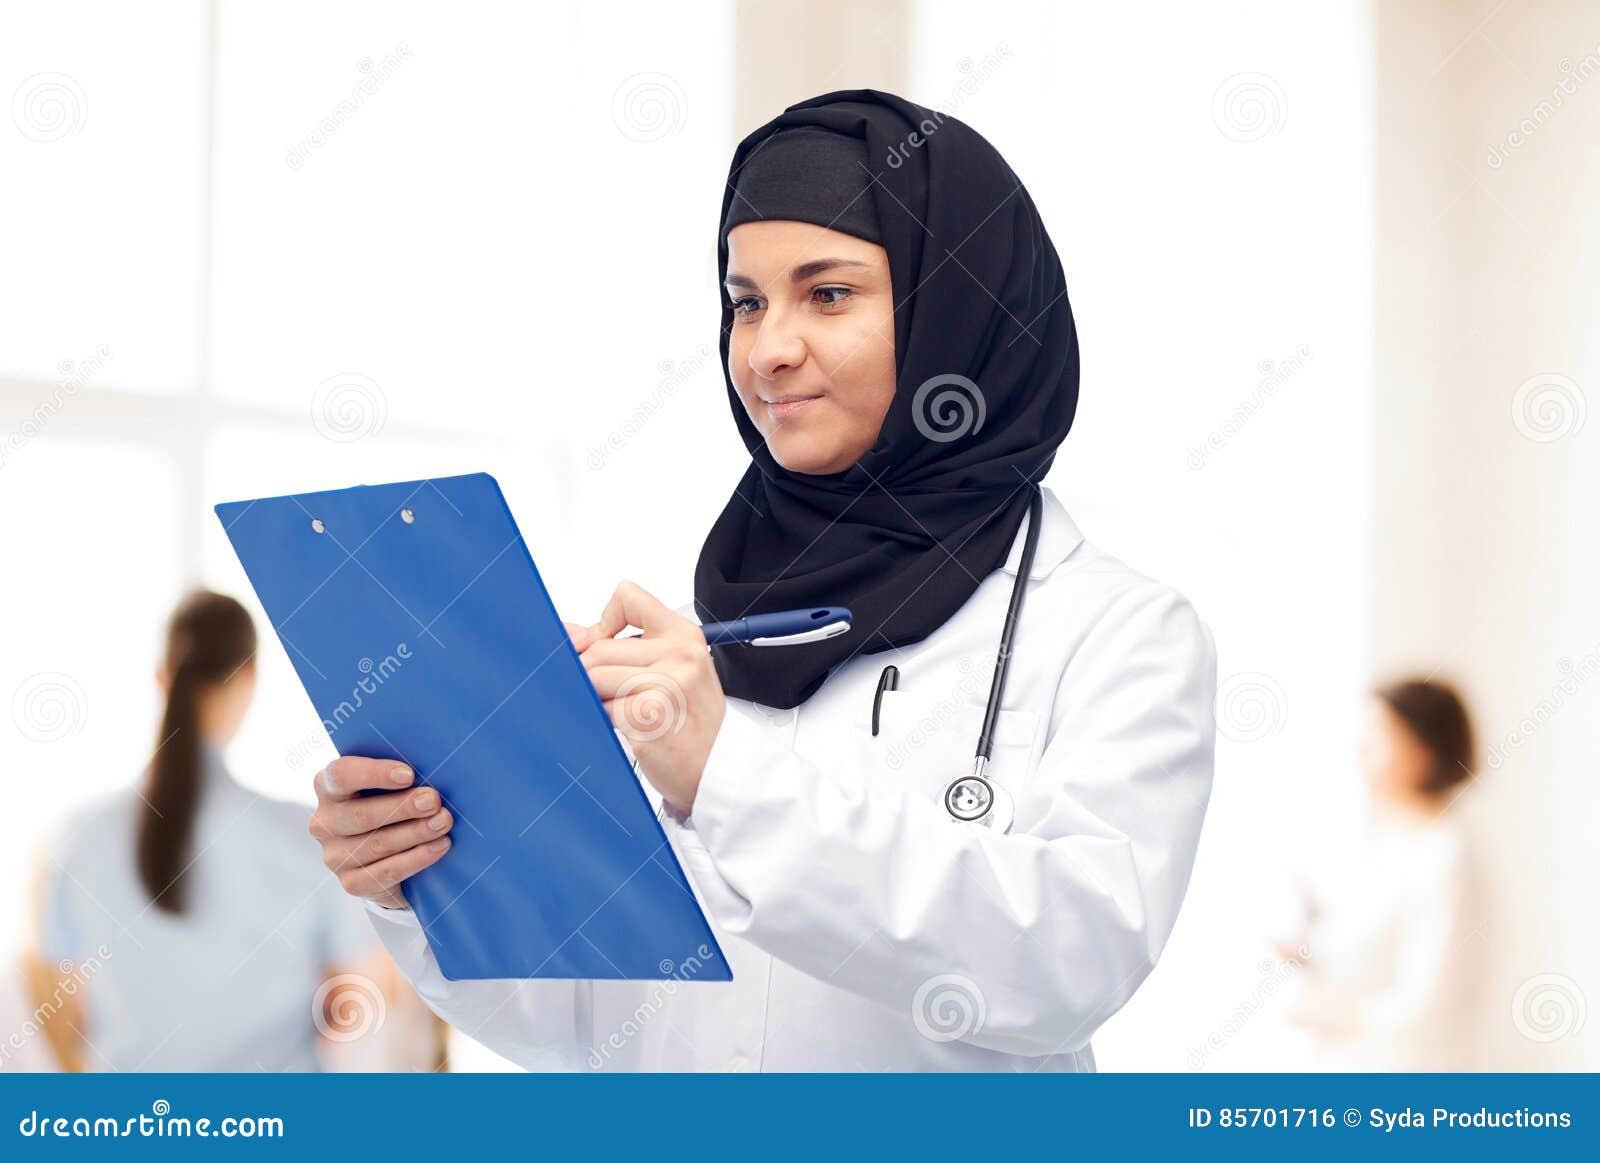 Врач мусульман. Врач в хиджабе. Женщина мусульманка врач. Мусульманка женщина и медицина. Хиджаб в больнице.